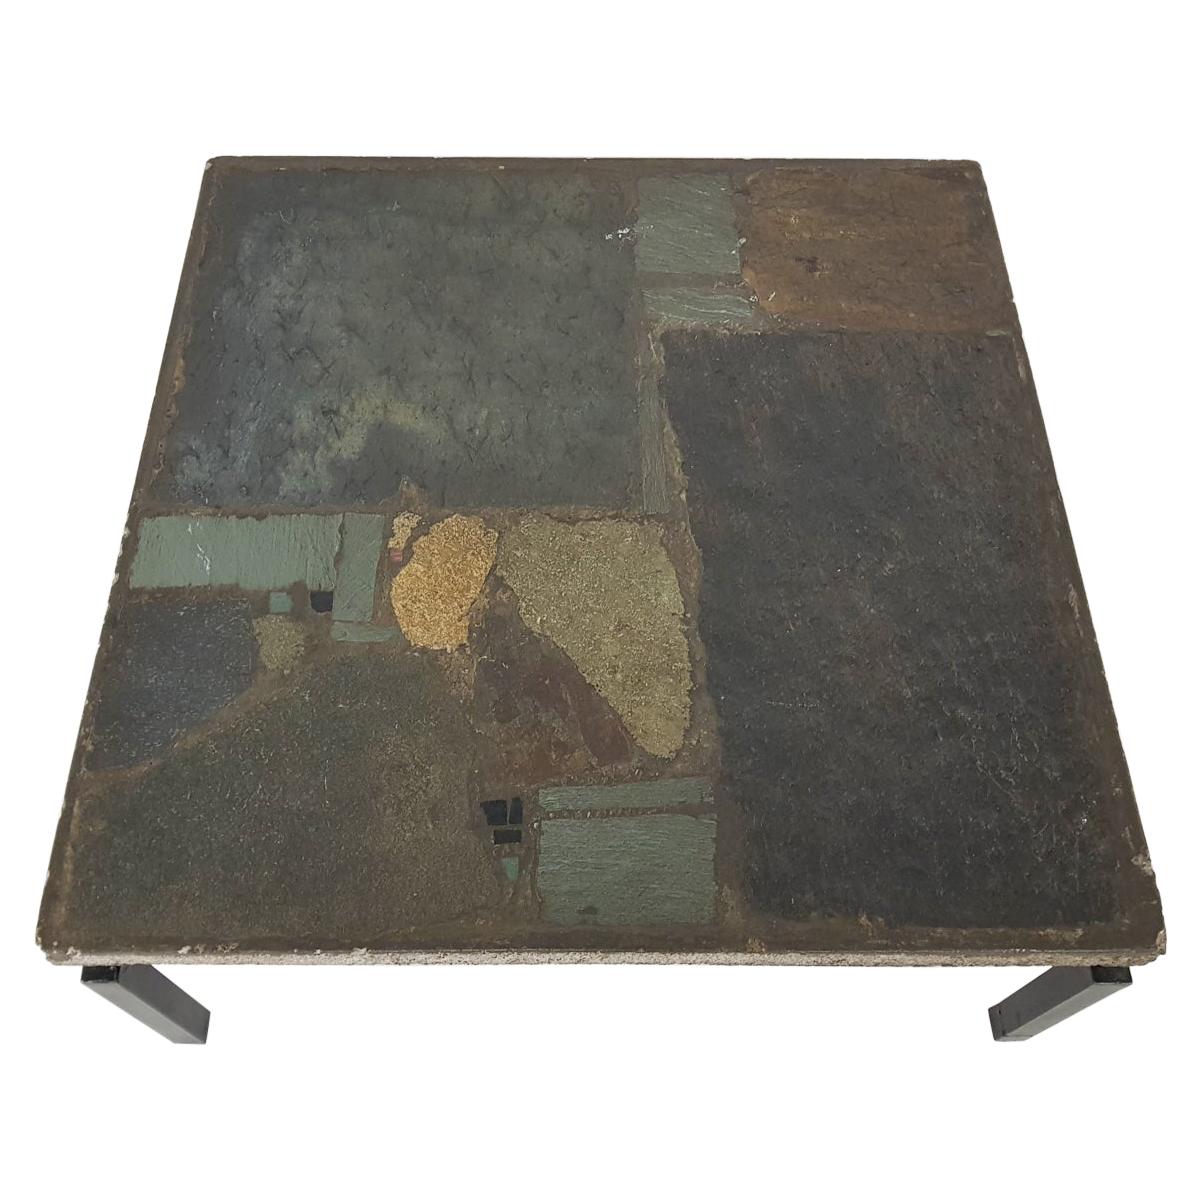 Early Paul Kingma Stone Mosaic Coffee Table, Dutch Design and Art, 1963